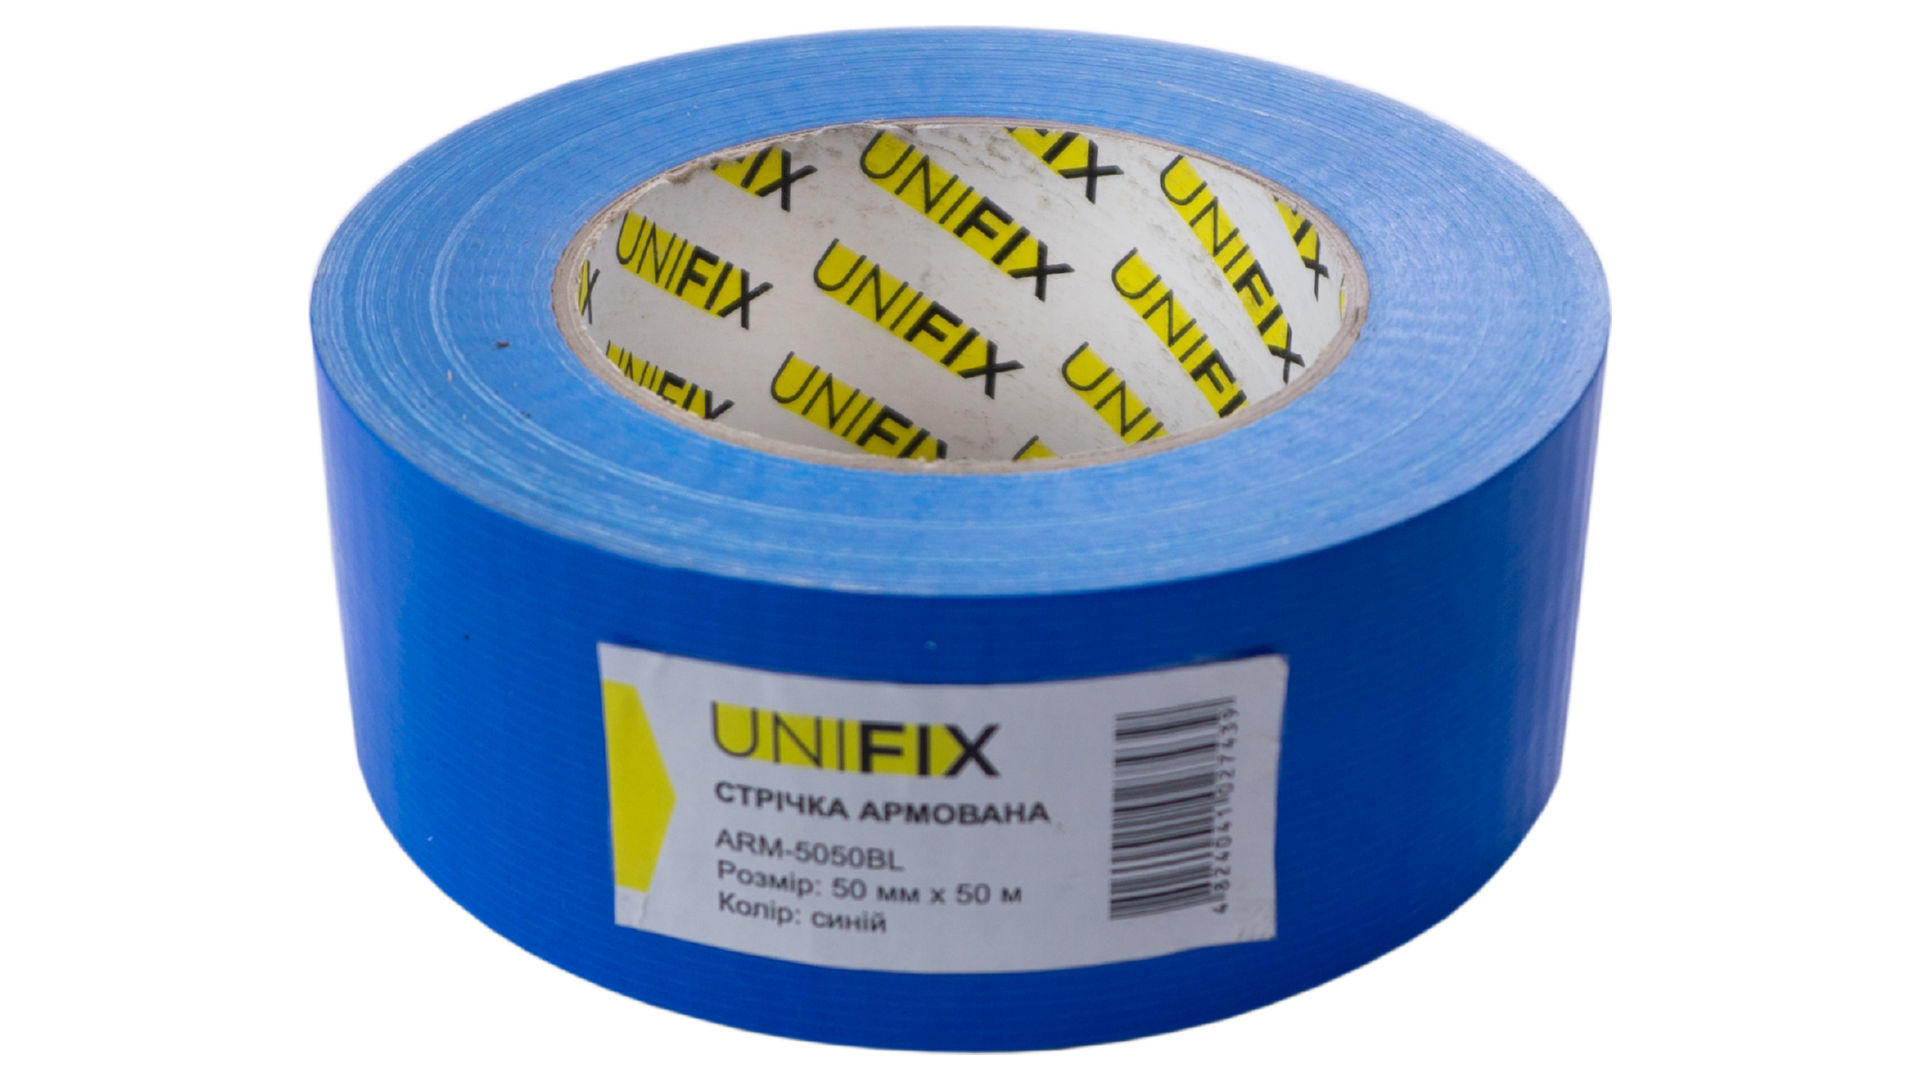 Лента армированная Unifix - 50 мм x 50 м синяя 4